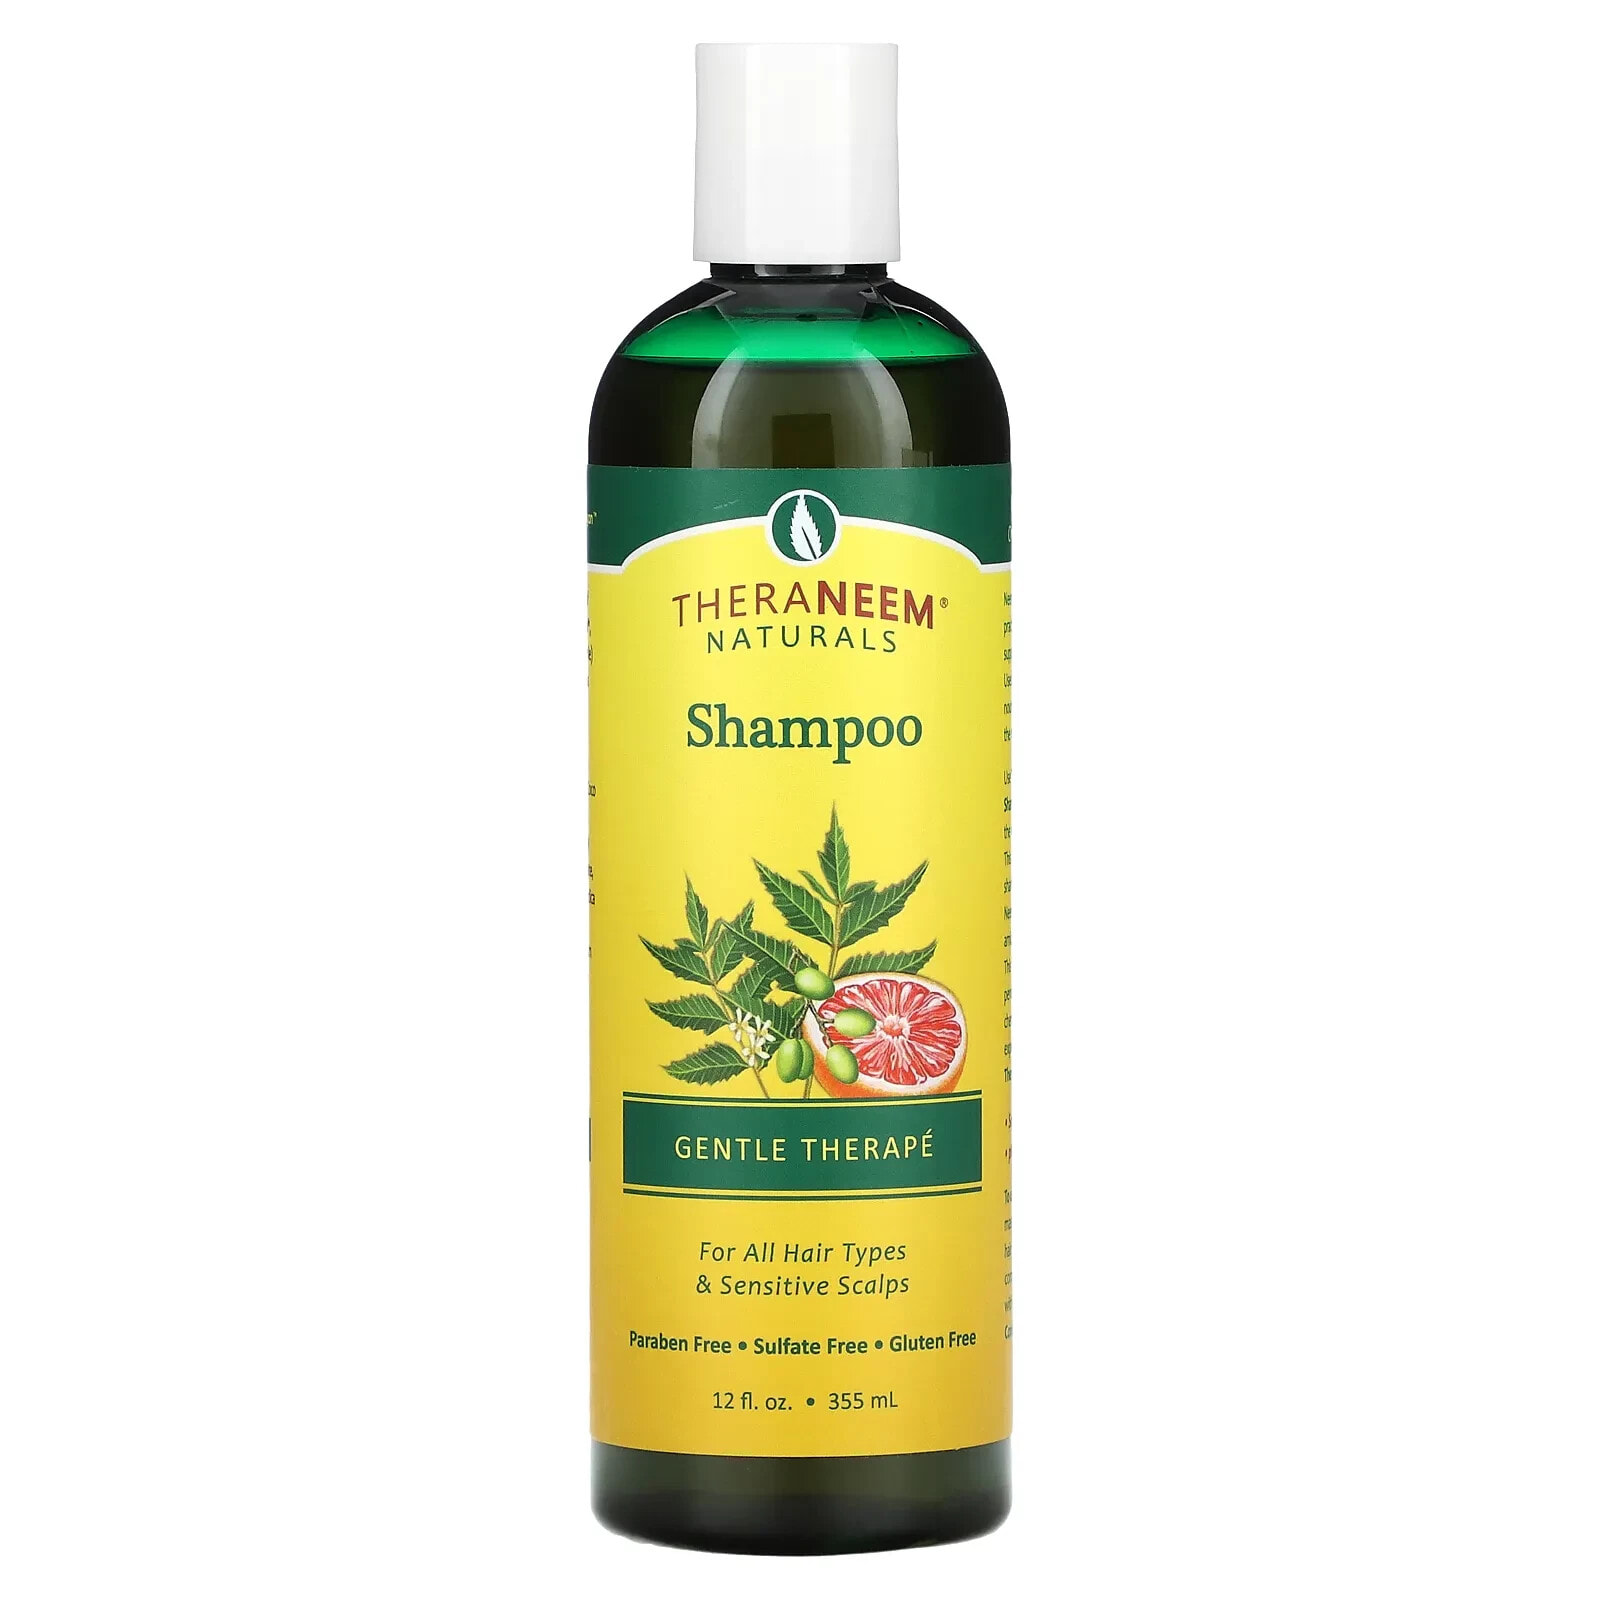 Organix South, TheraNeem Naturals, Gentle Therape Shampoo, For All Hair Types & Sensitive Scalps, 12 fl oz (355 ml)